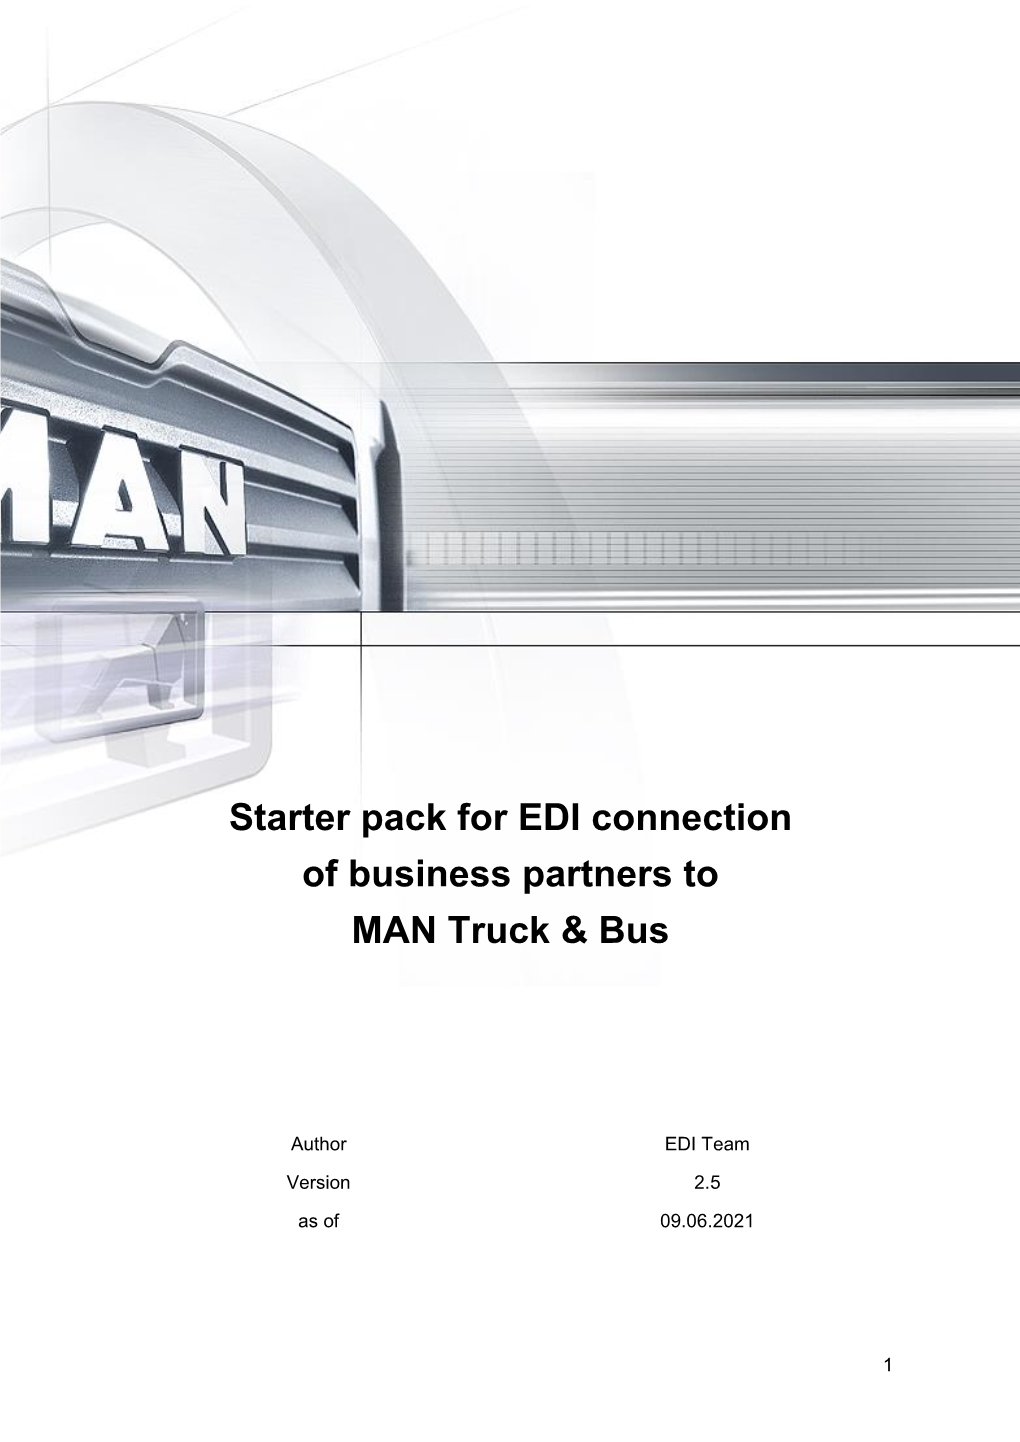 Starter Pack for EDI-Connection